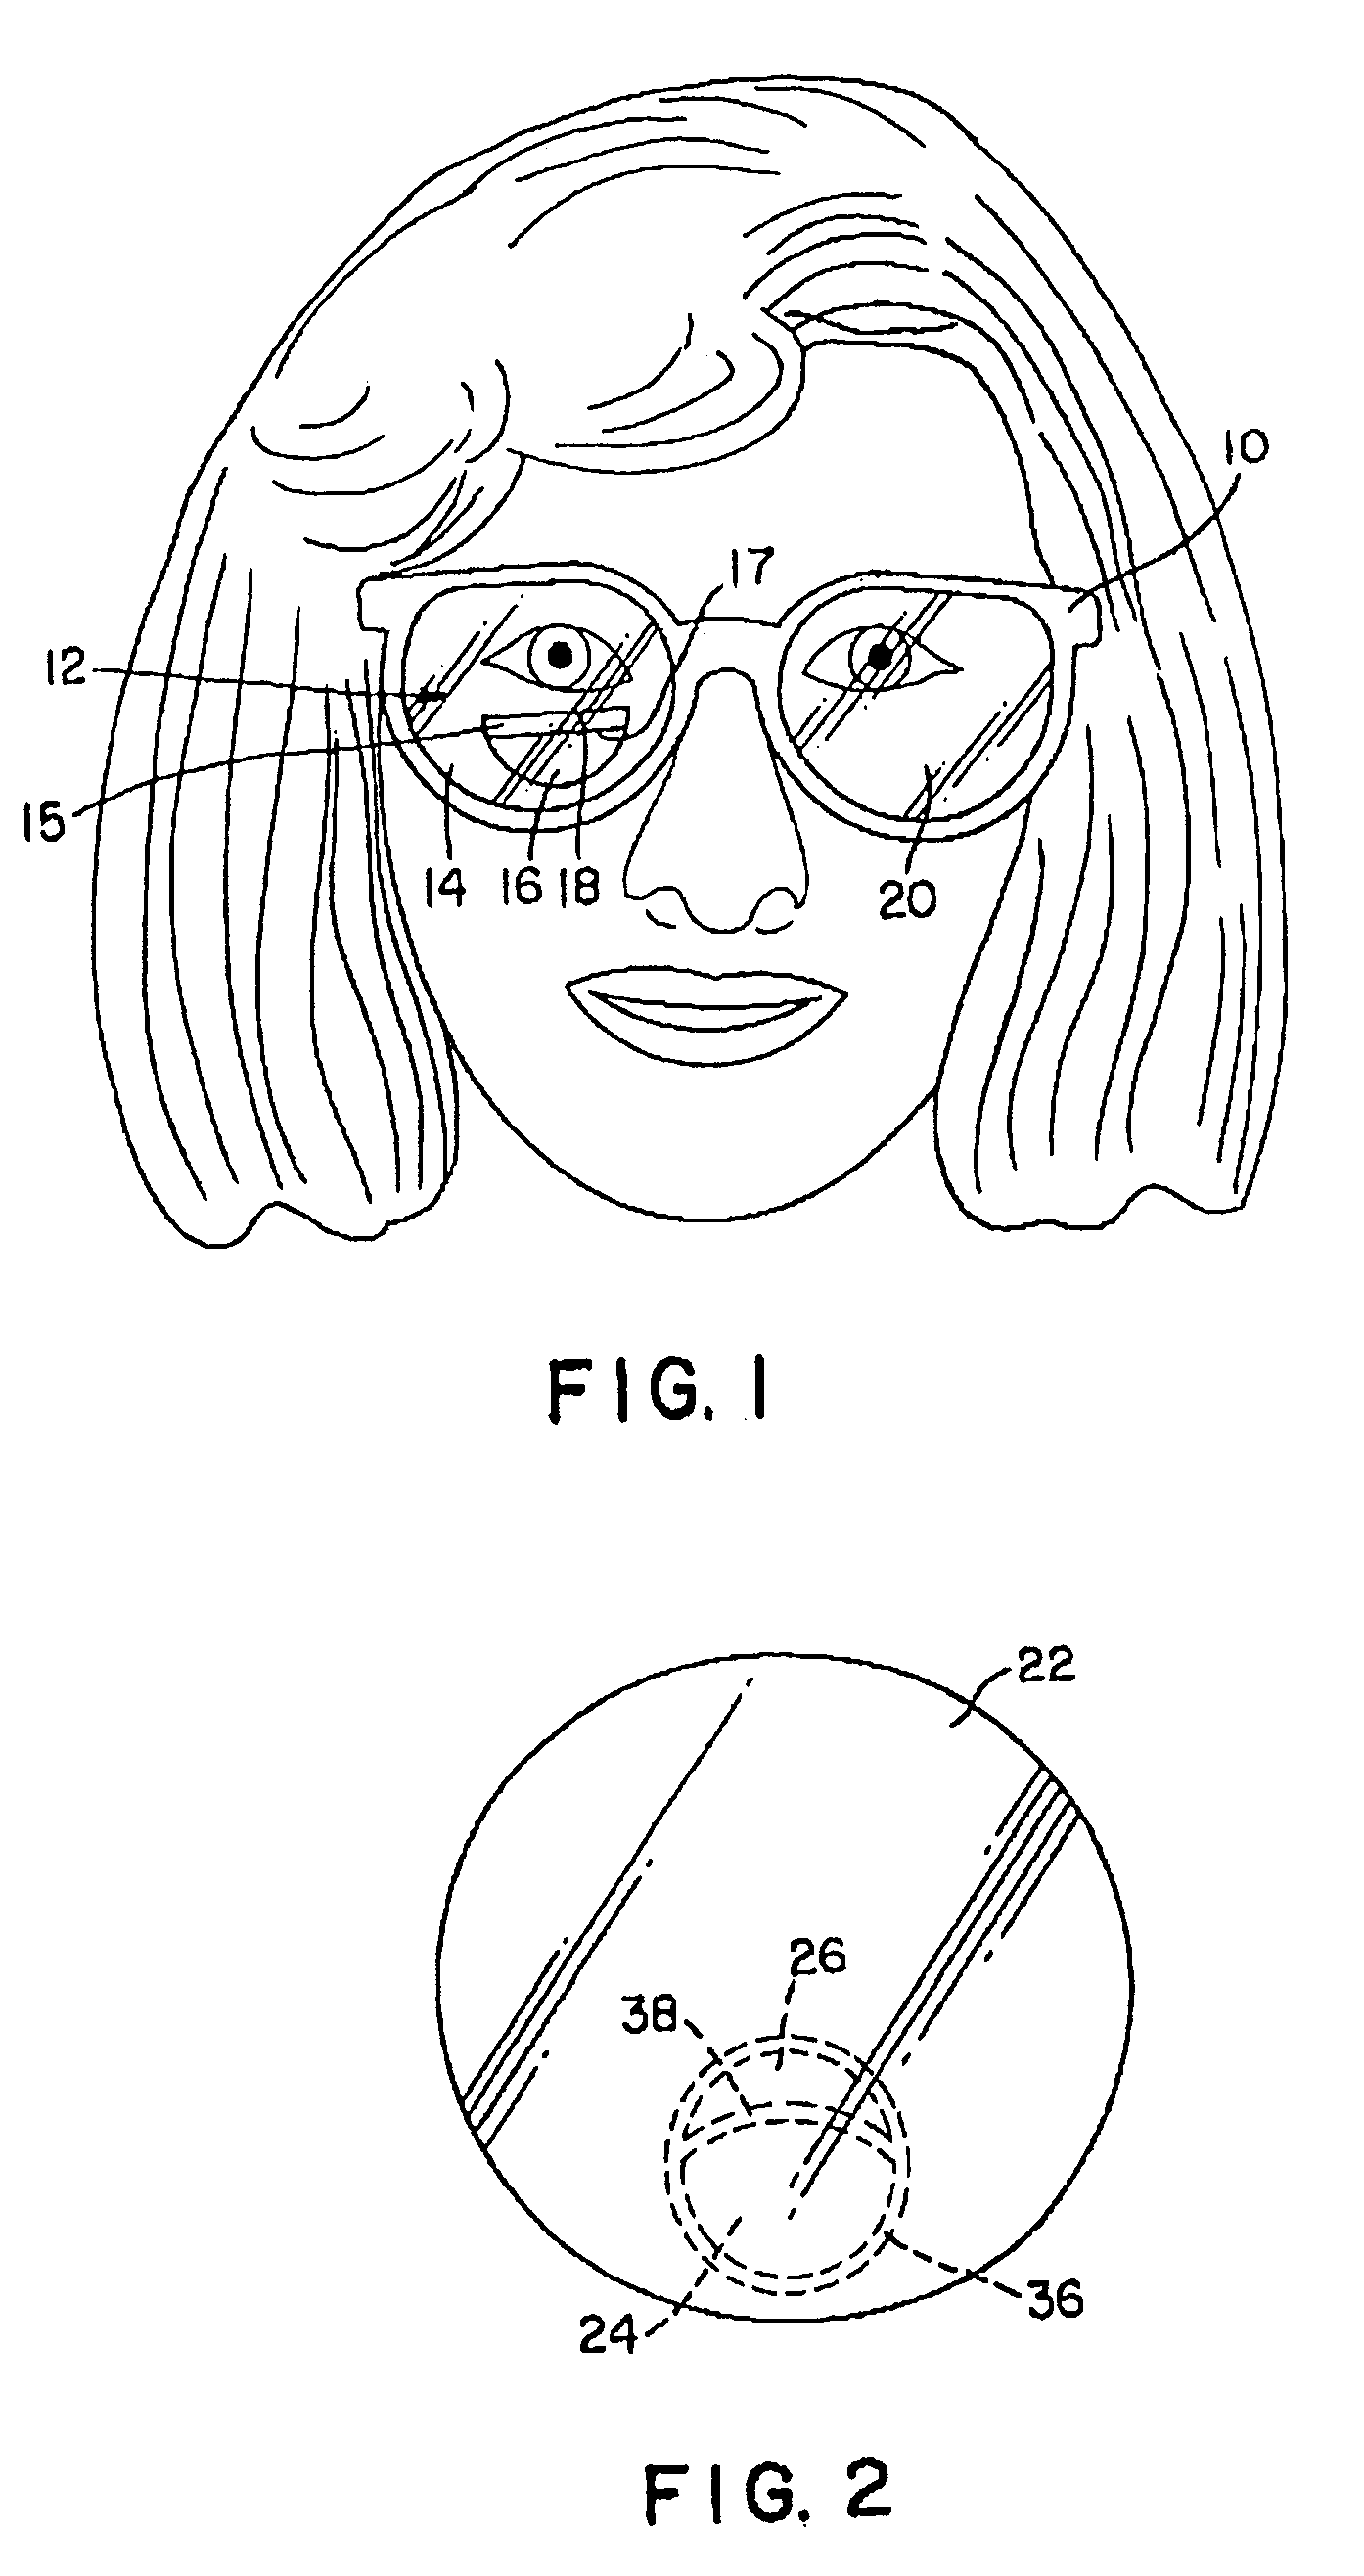 Non-progressive trifocal ophthalmic lens